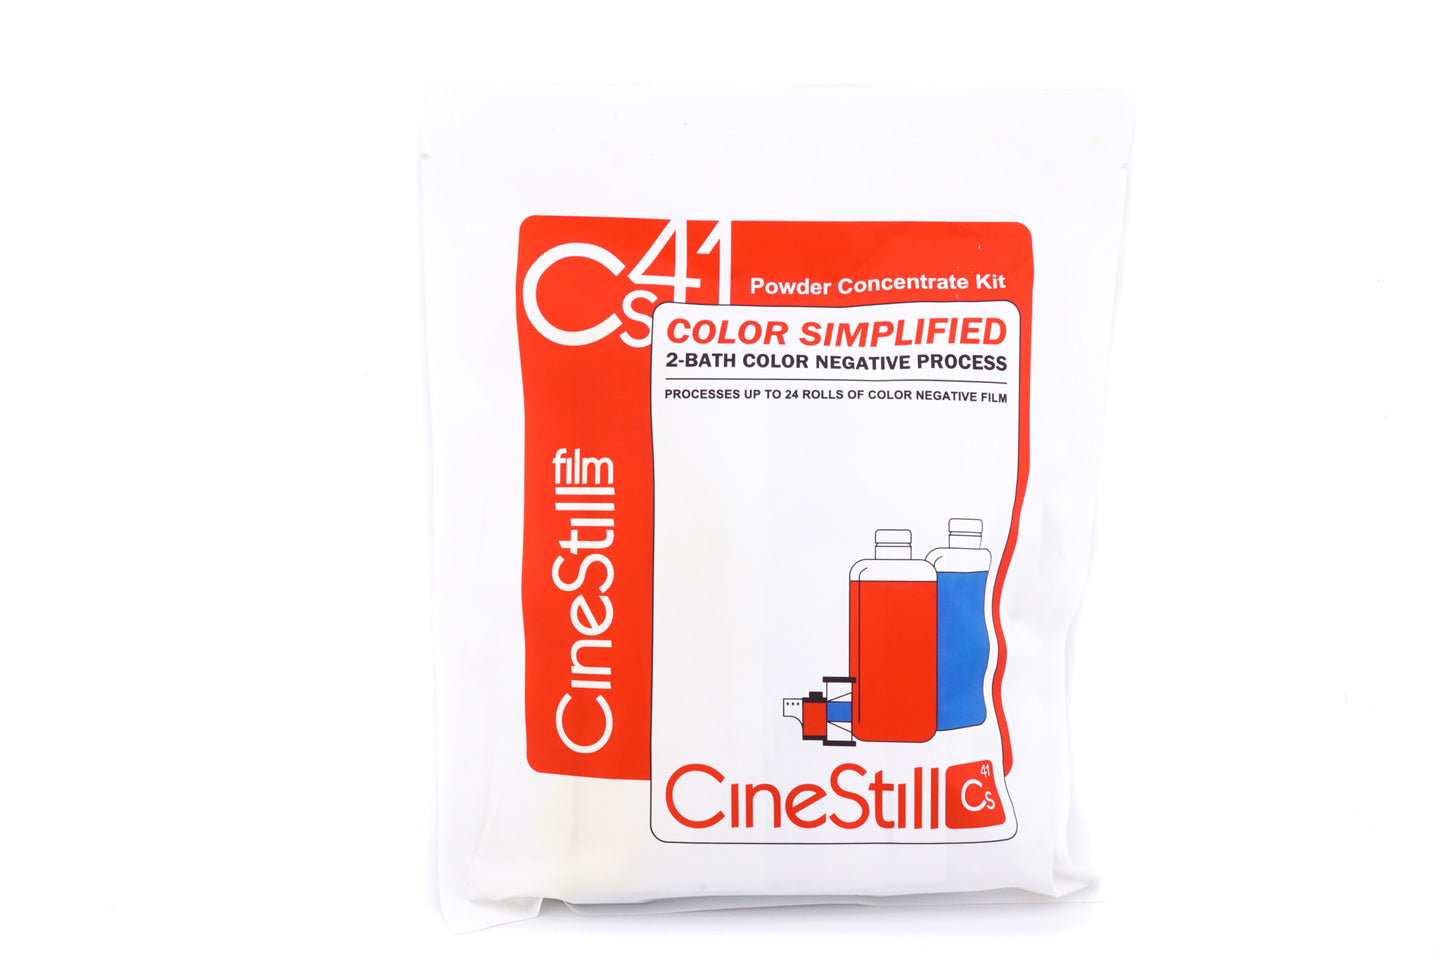 Cinestill Cs41 Simplified Kit Powder C-41 filminkehite